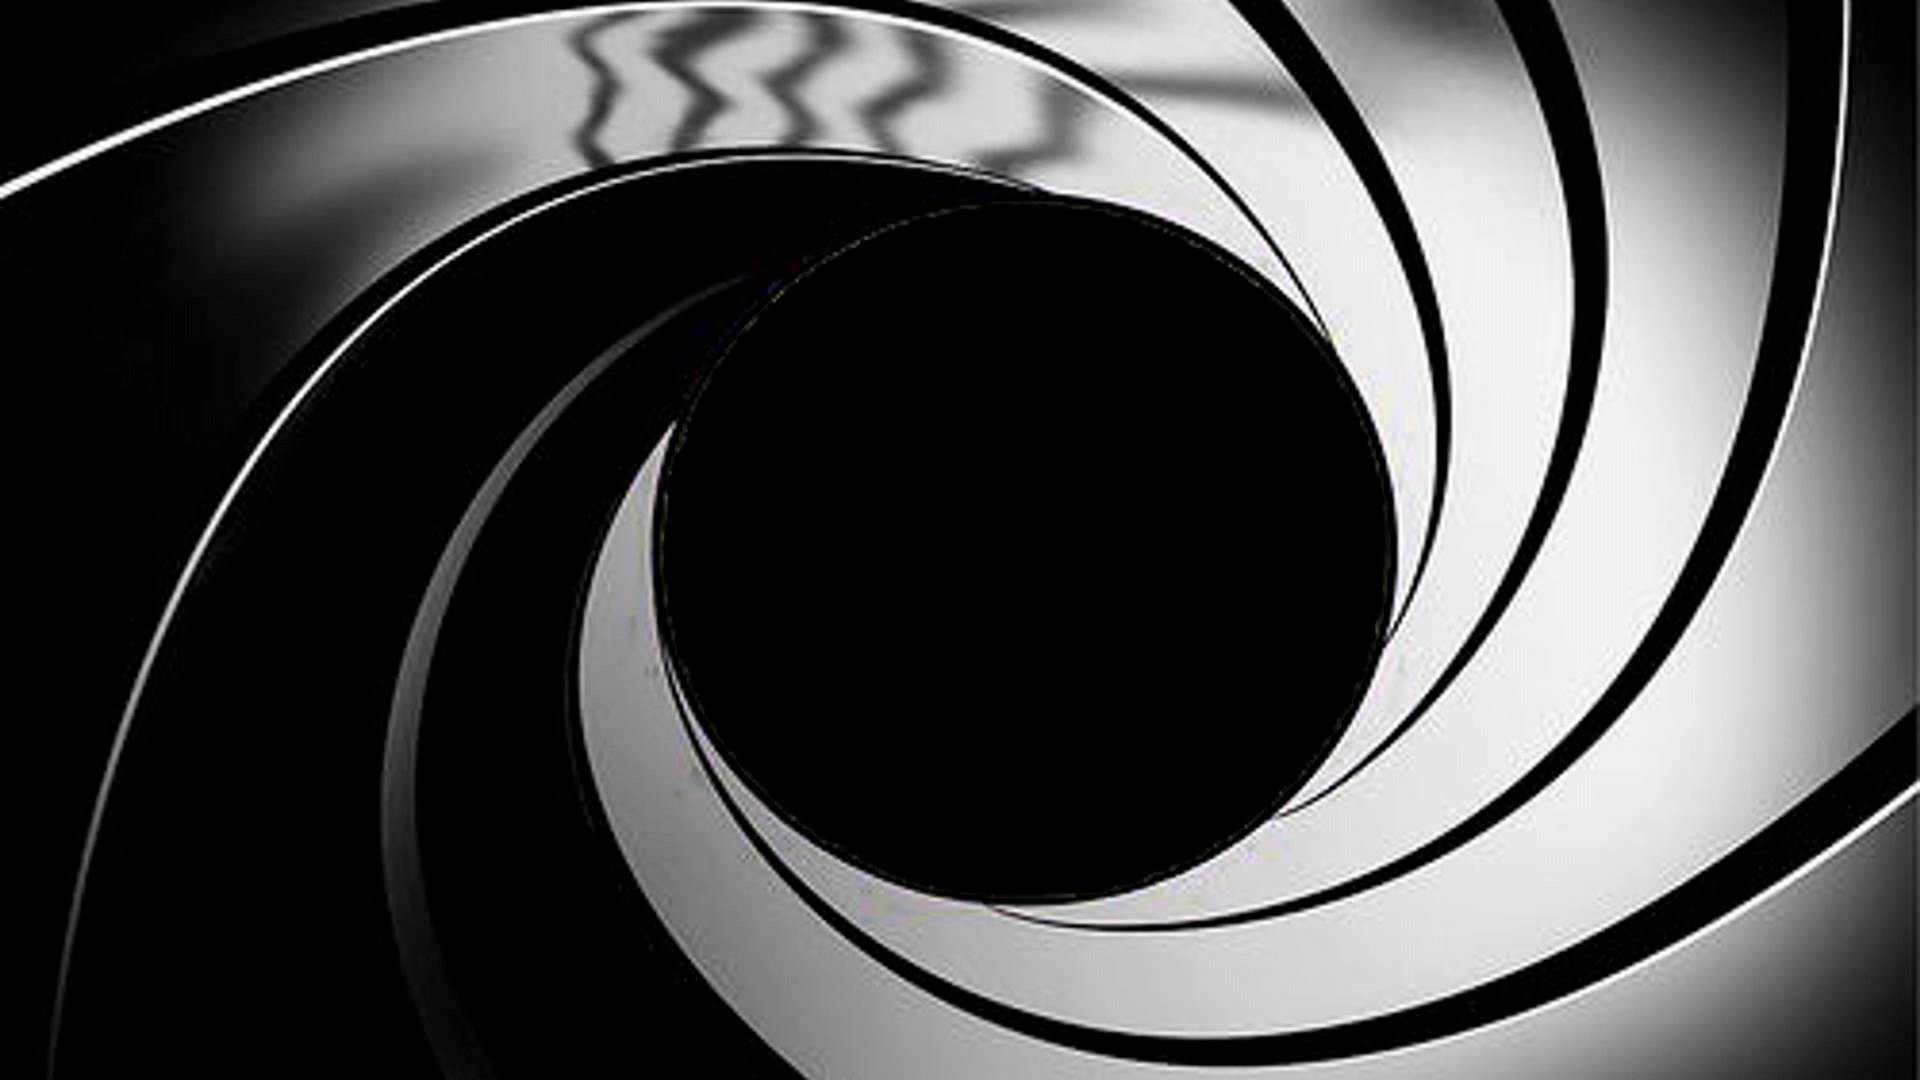 1920x1080 ... The James Bond 007 Dossier | James Bond 007 Wallpaper ...